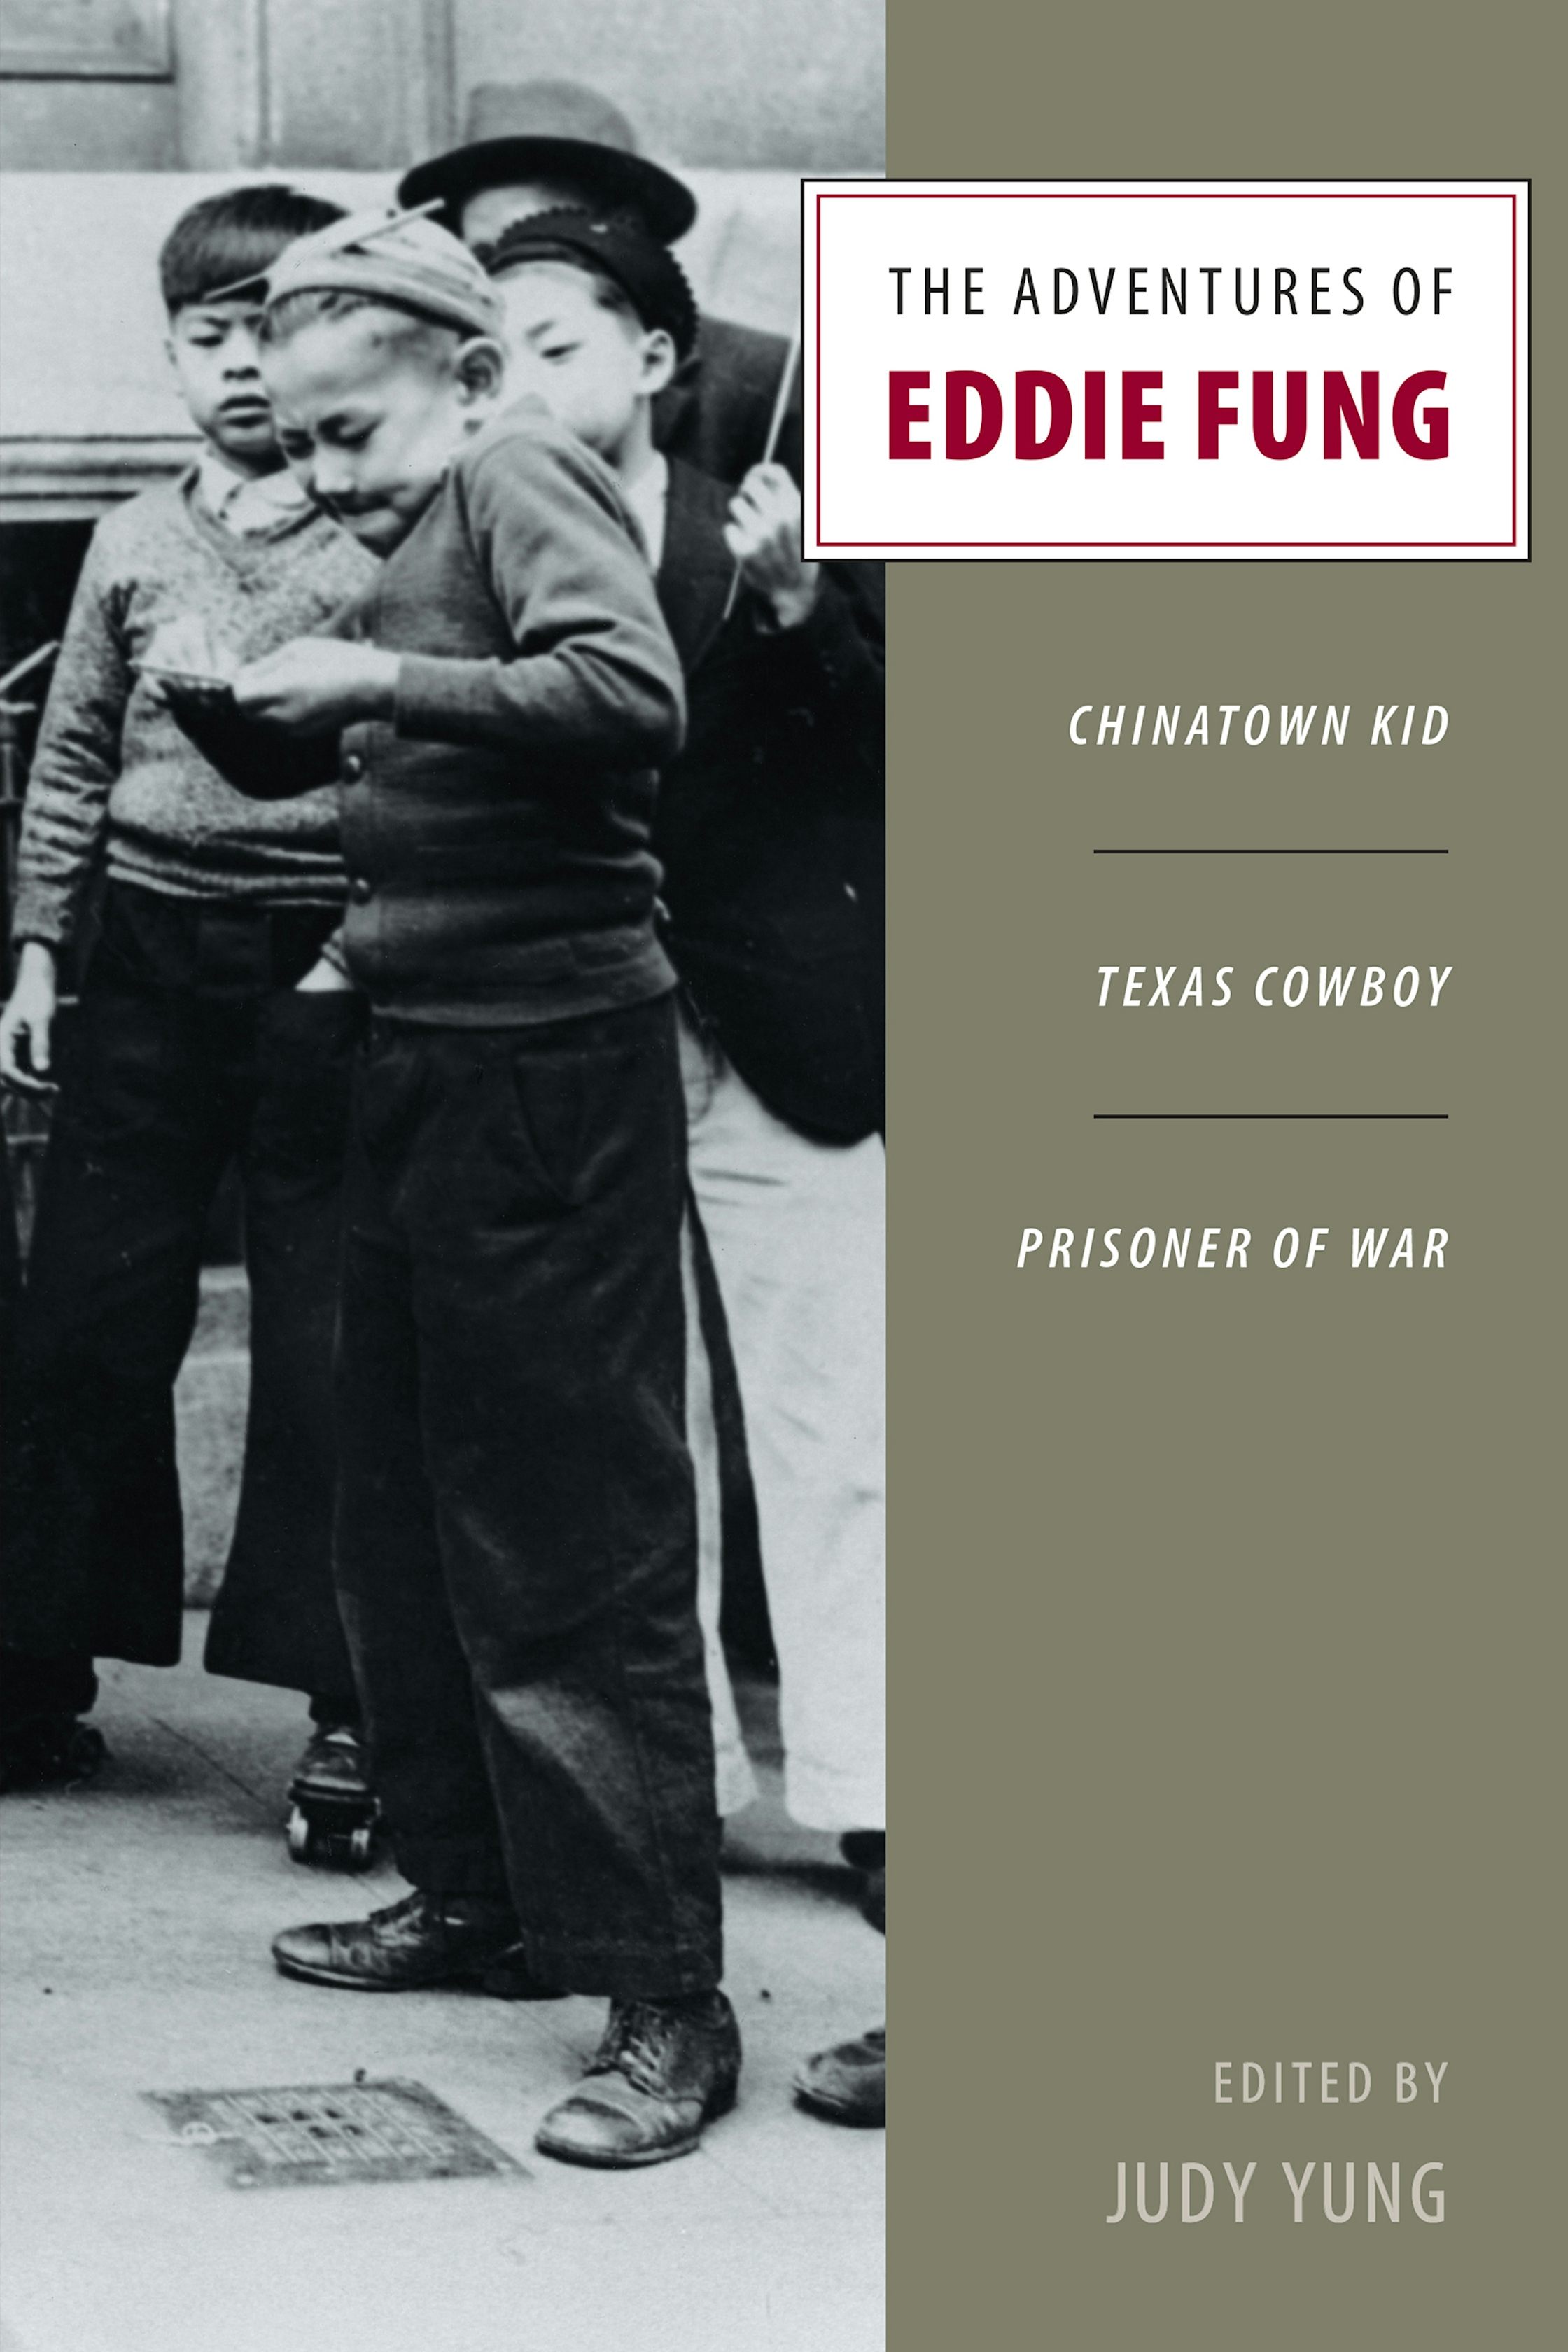 The Adventures of Eddie Fung